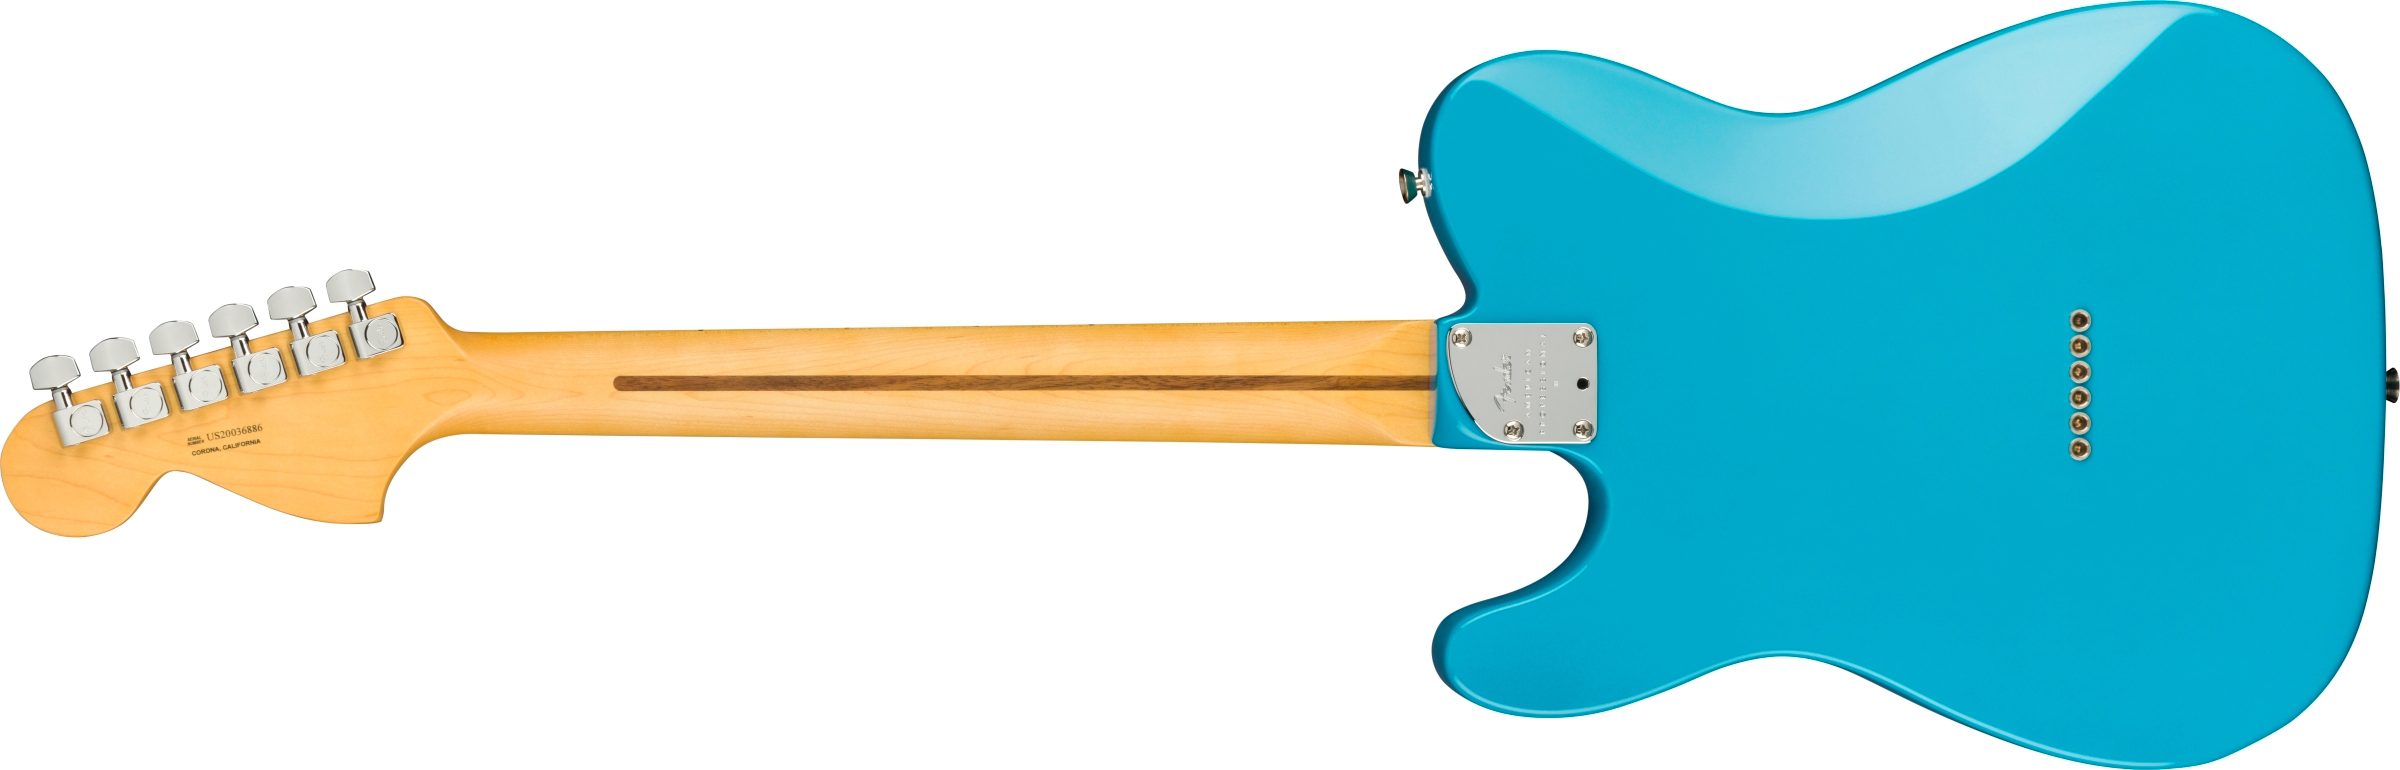 Fender American Professional II Telecaster Deluxe, Maple Fingerboard, Miami Blue